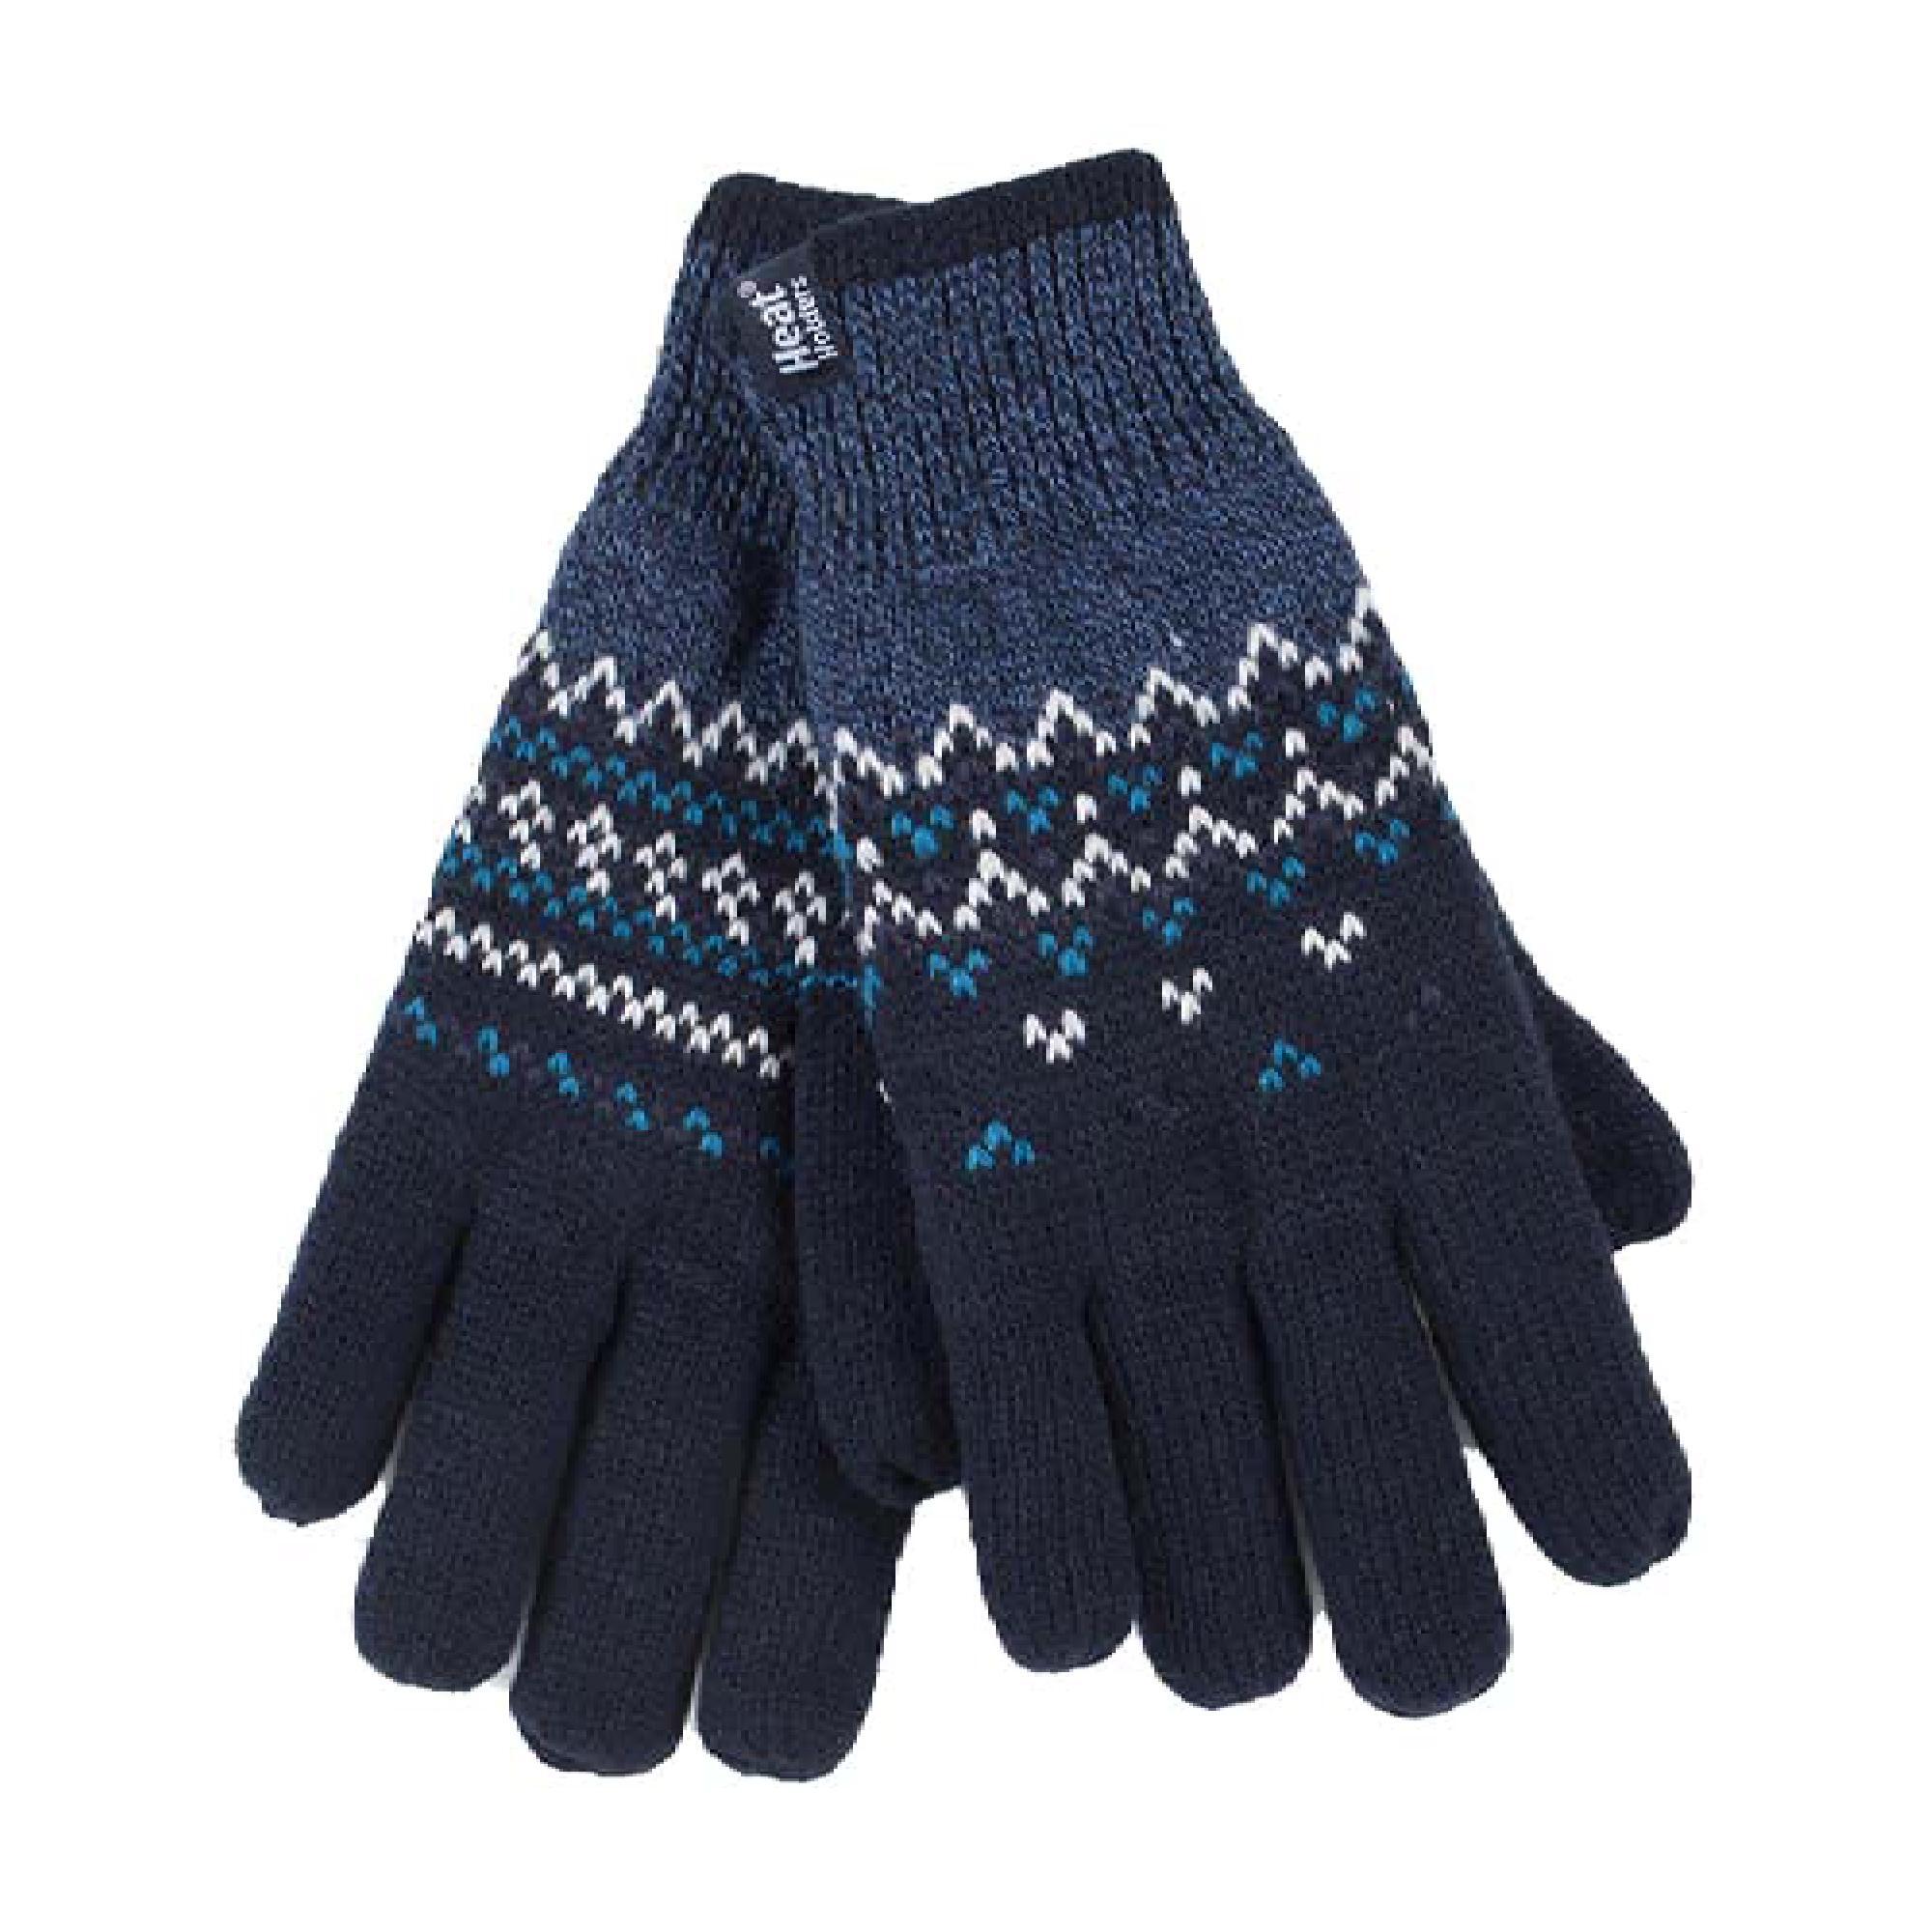 HEAT HOLDERS Ladies Fairisle Fleece Lined Knitted Warm Winter Thermal Gloves